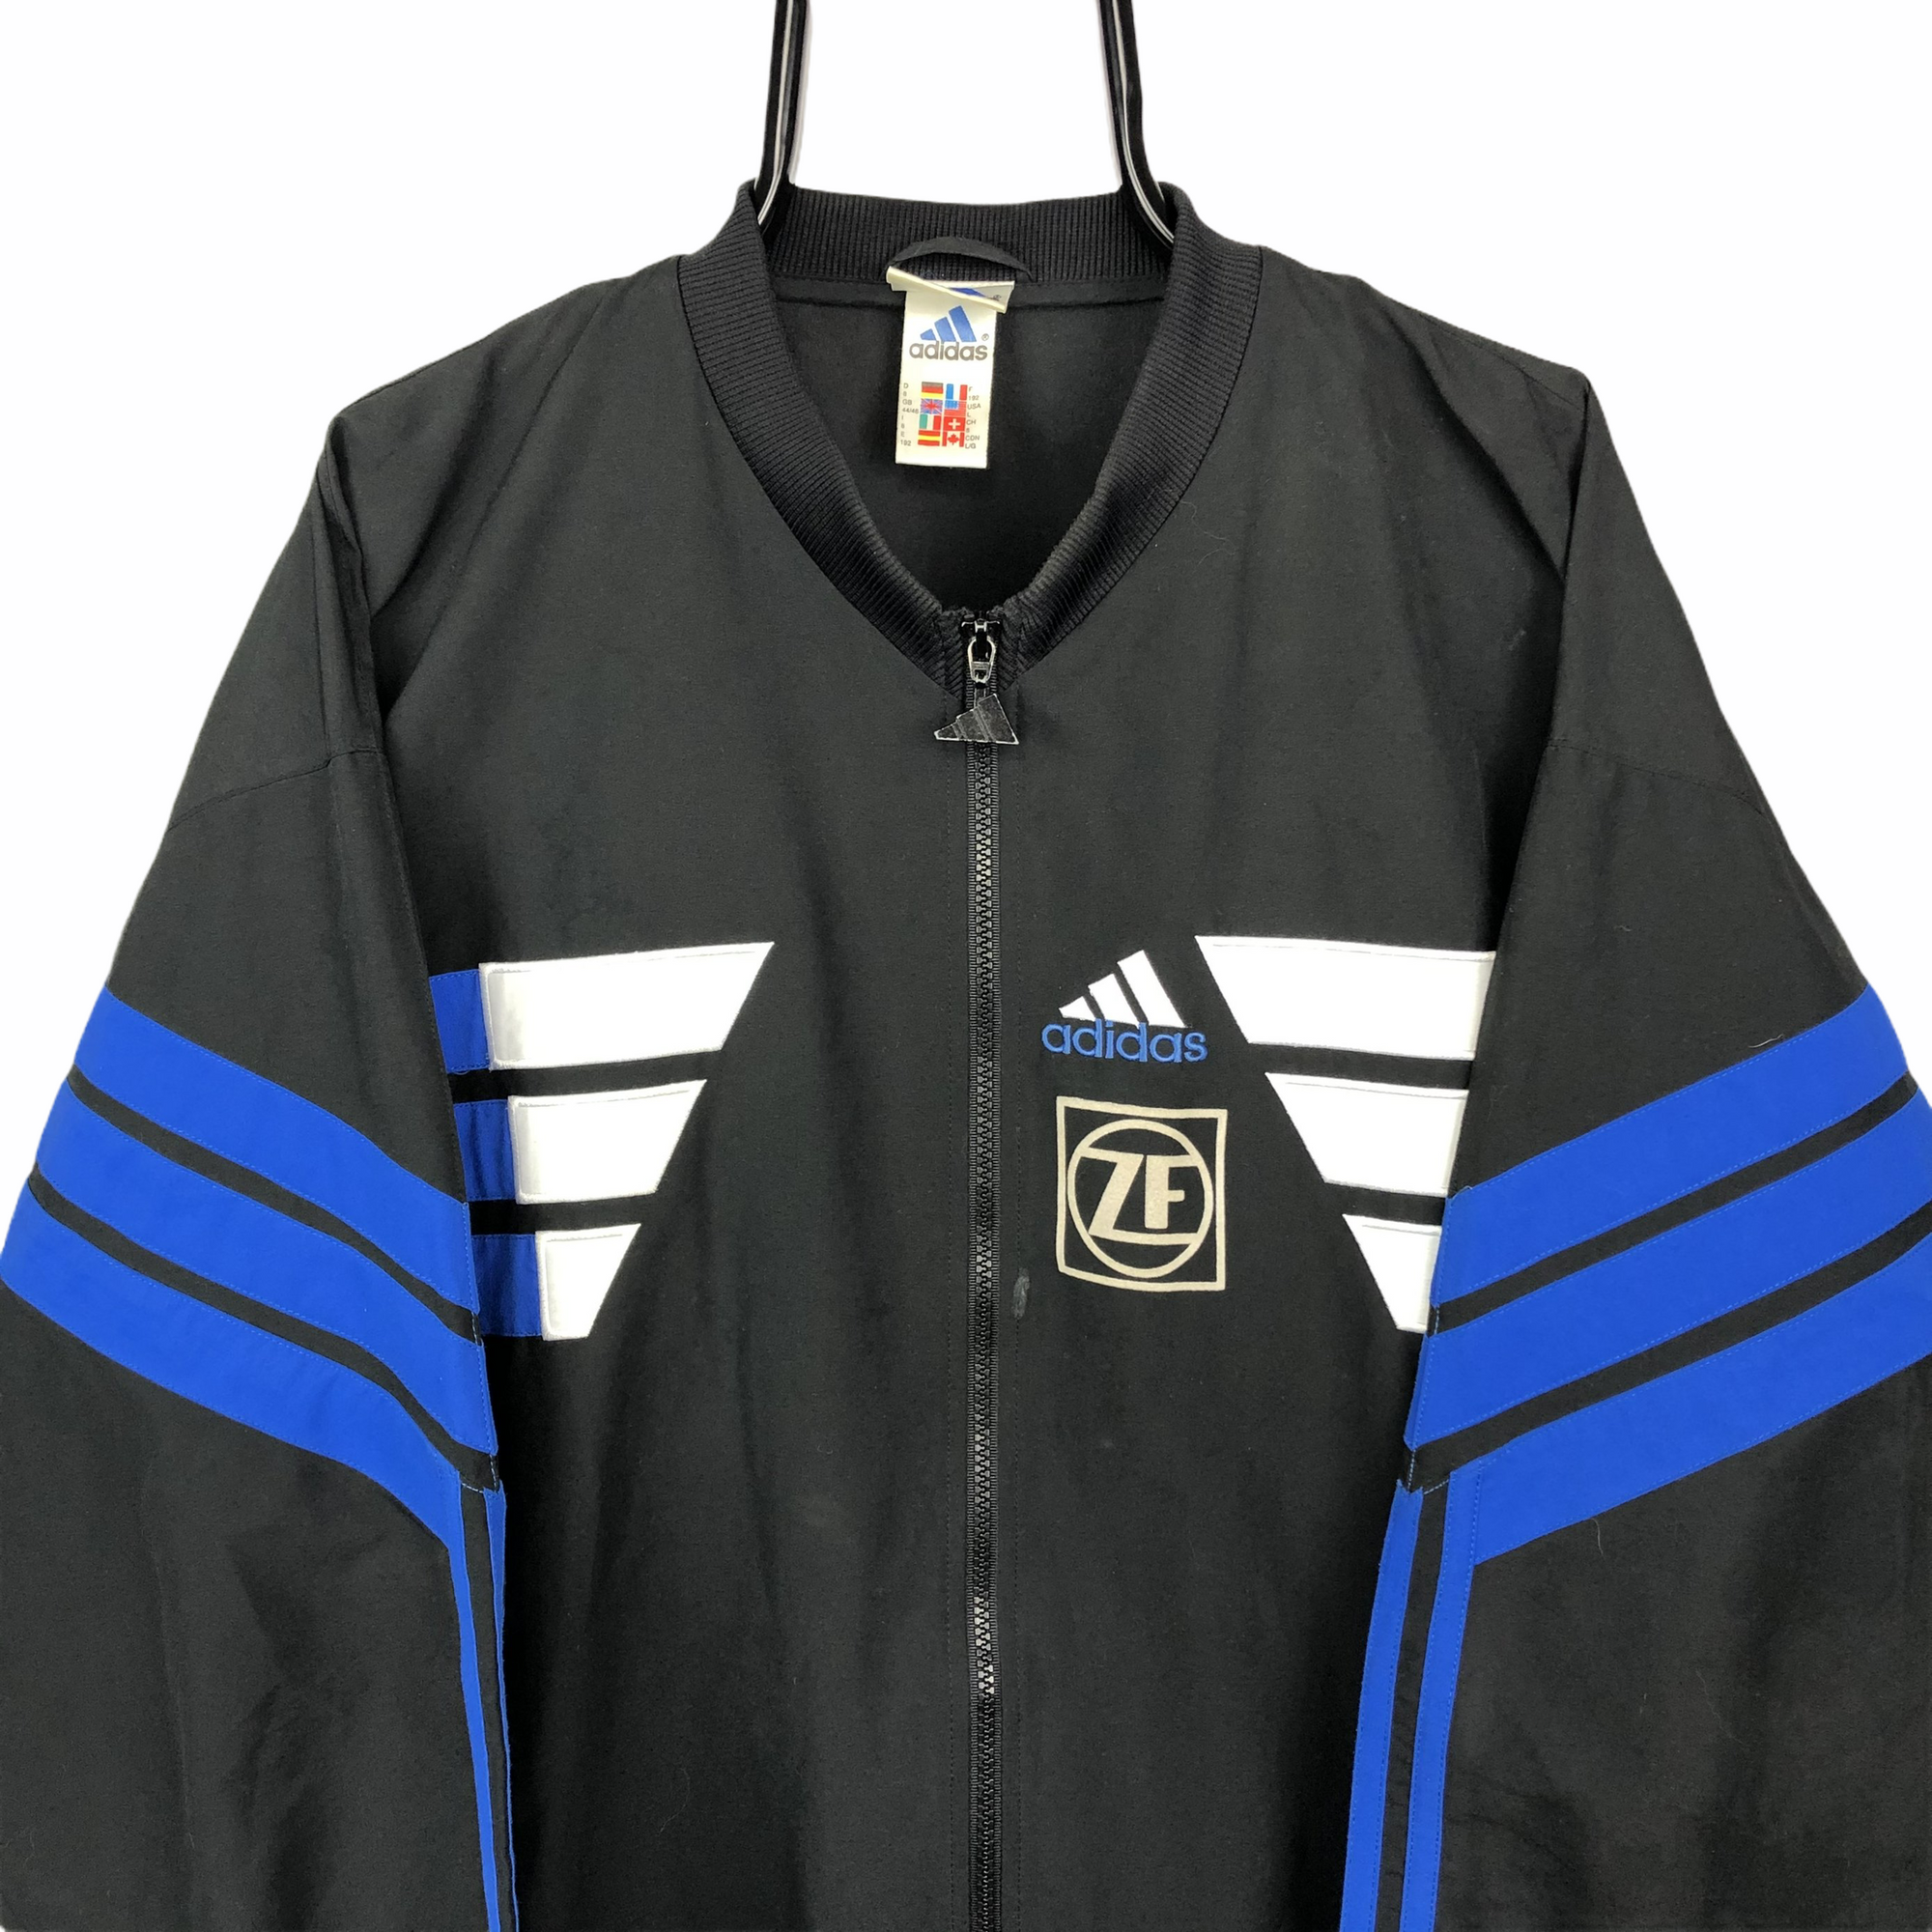 Vintage 90s Adidas Track Jacket in Black/White/Blue - Men's Large/Women's XL